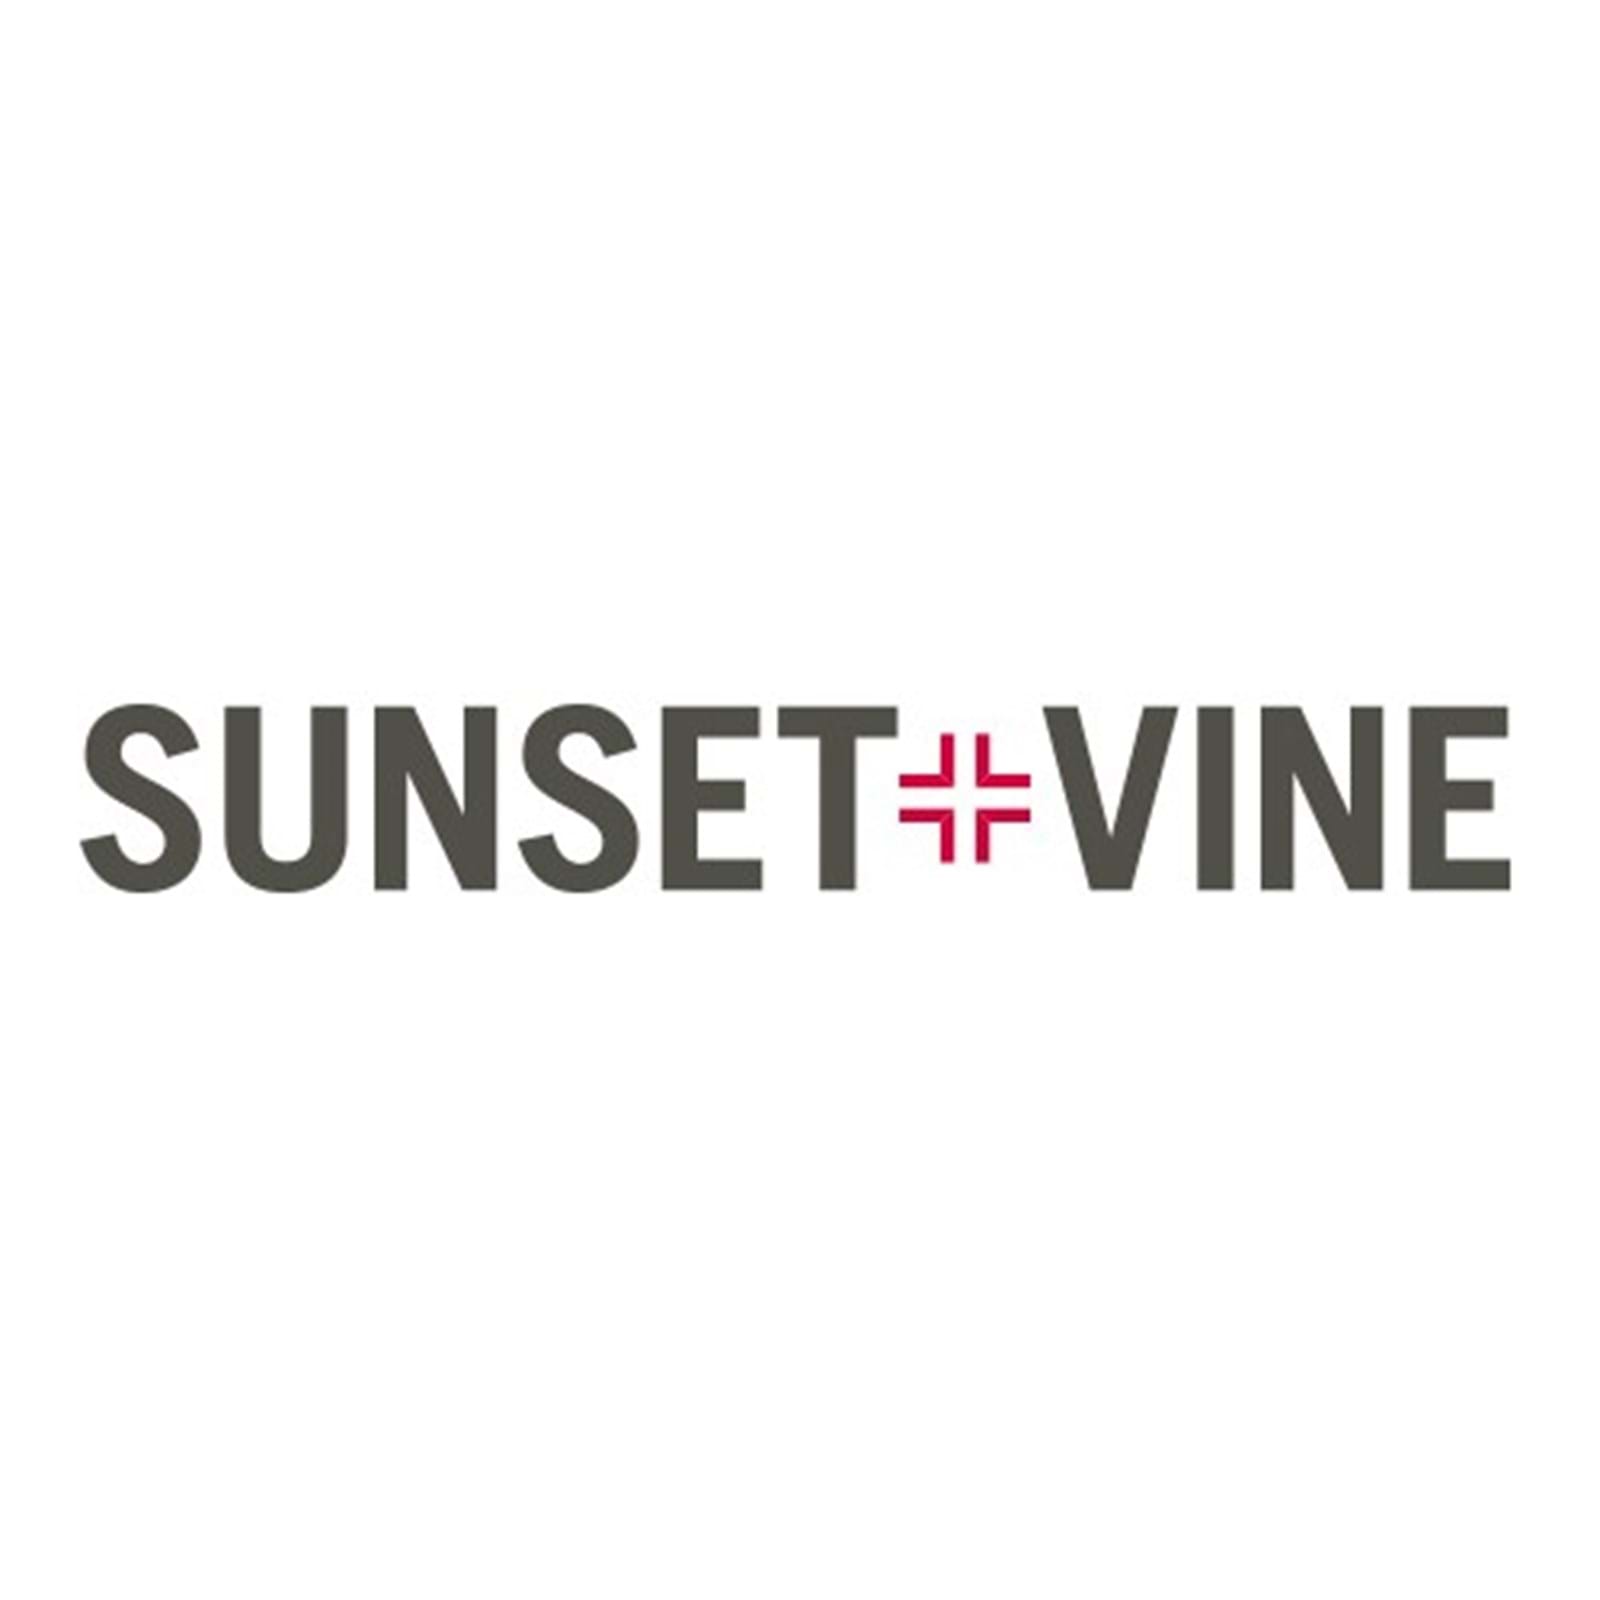 Sunset+Vine nominated at the Televisual Bulldog Awards